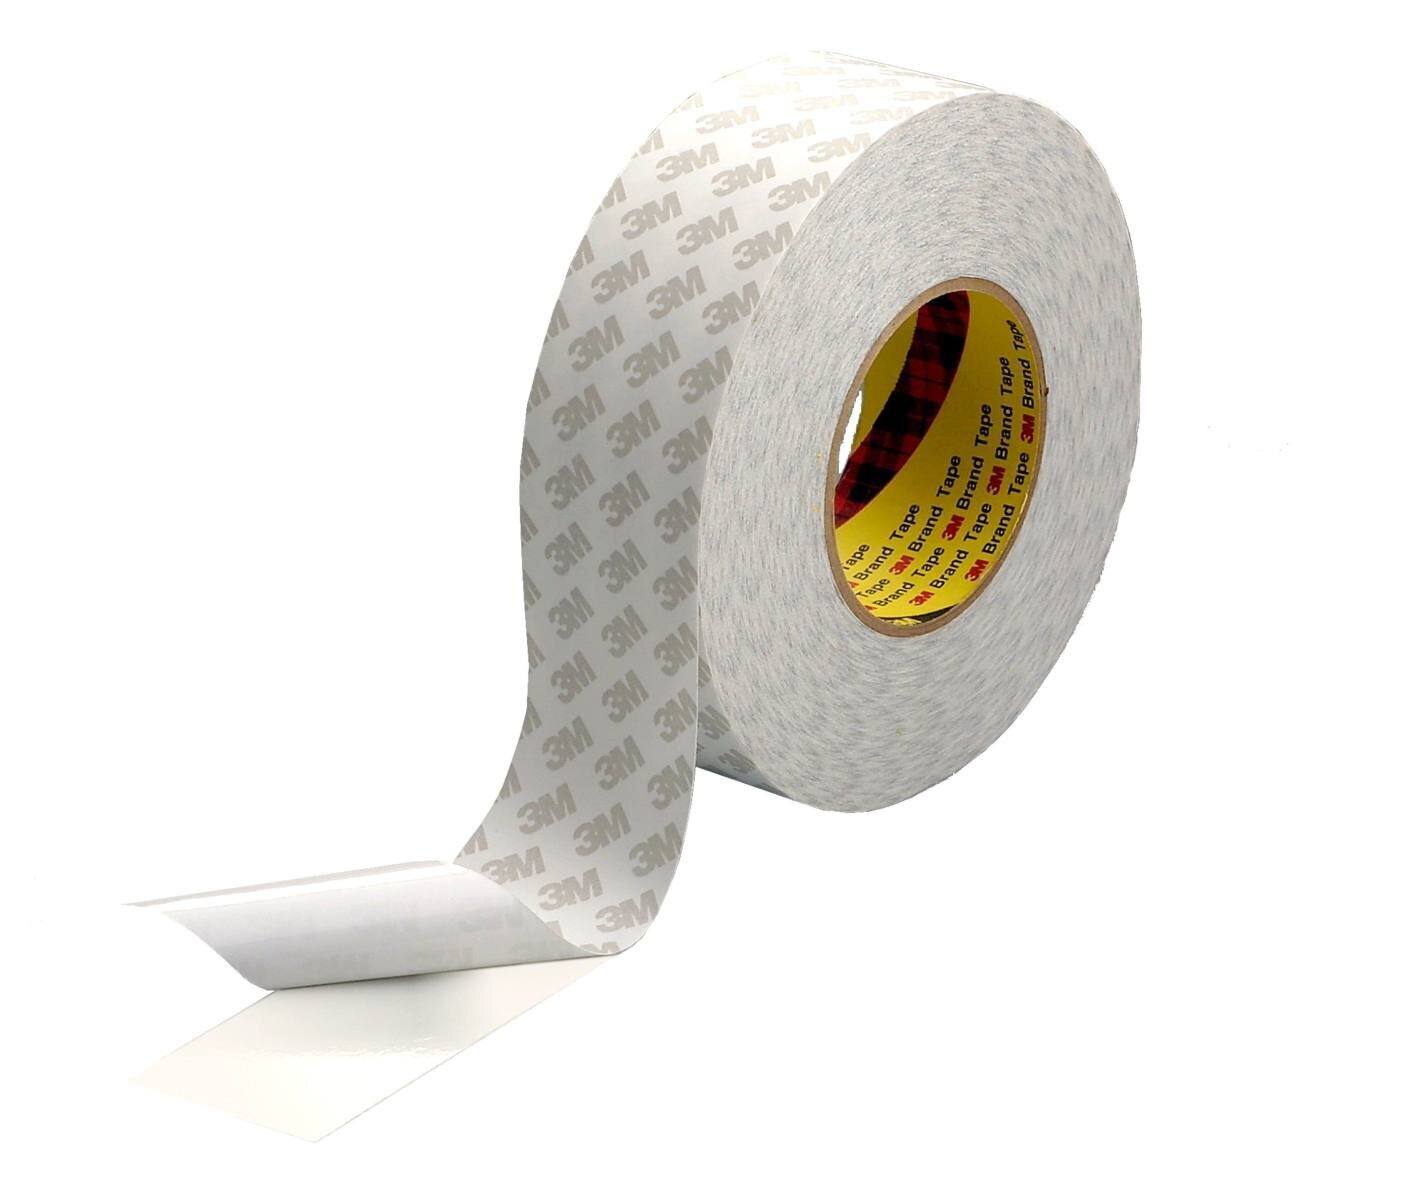 3M Dubbelzijdig plakband met vliespapier als rug 9080HL, wit, 50 mm x 50 m, 0,16 mm